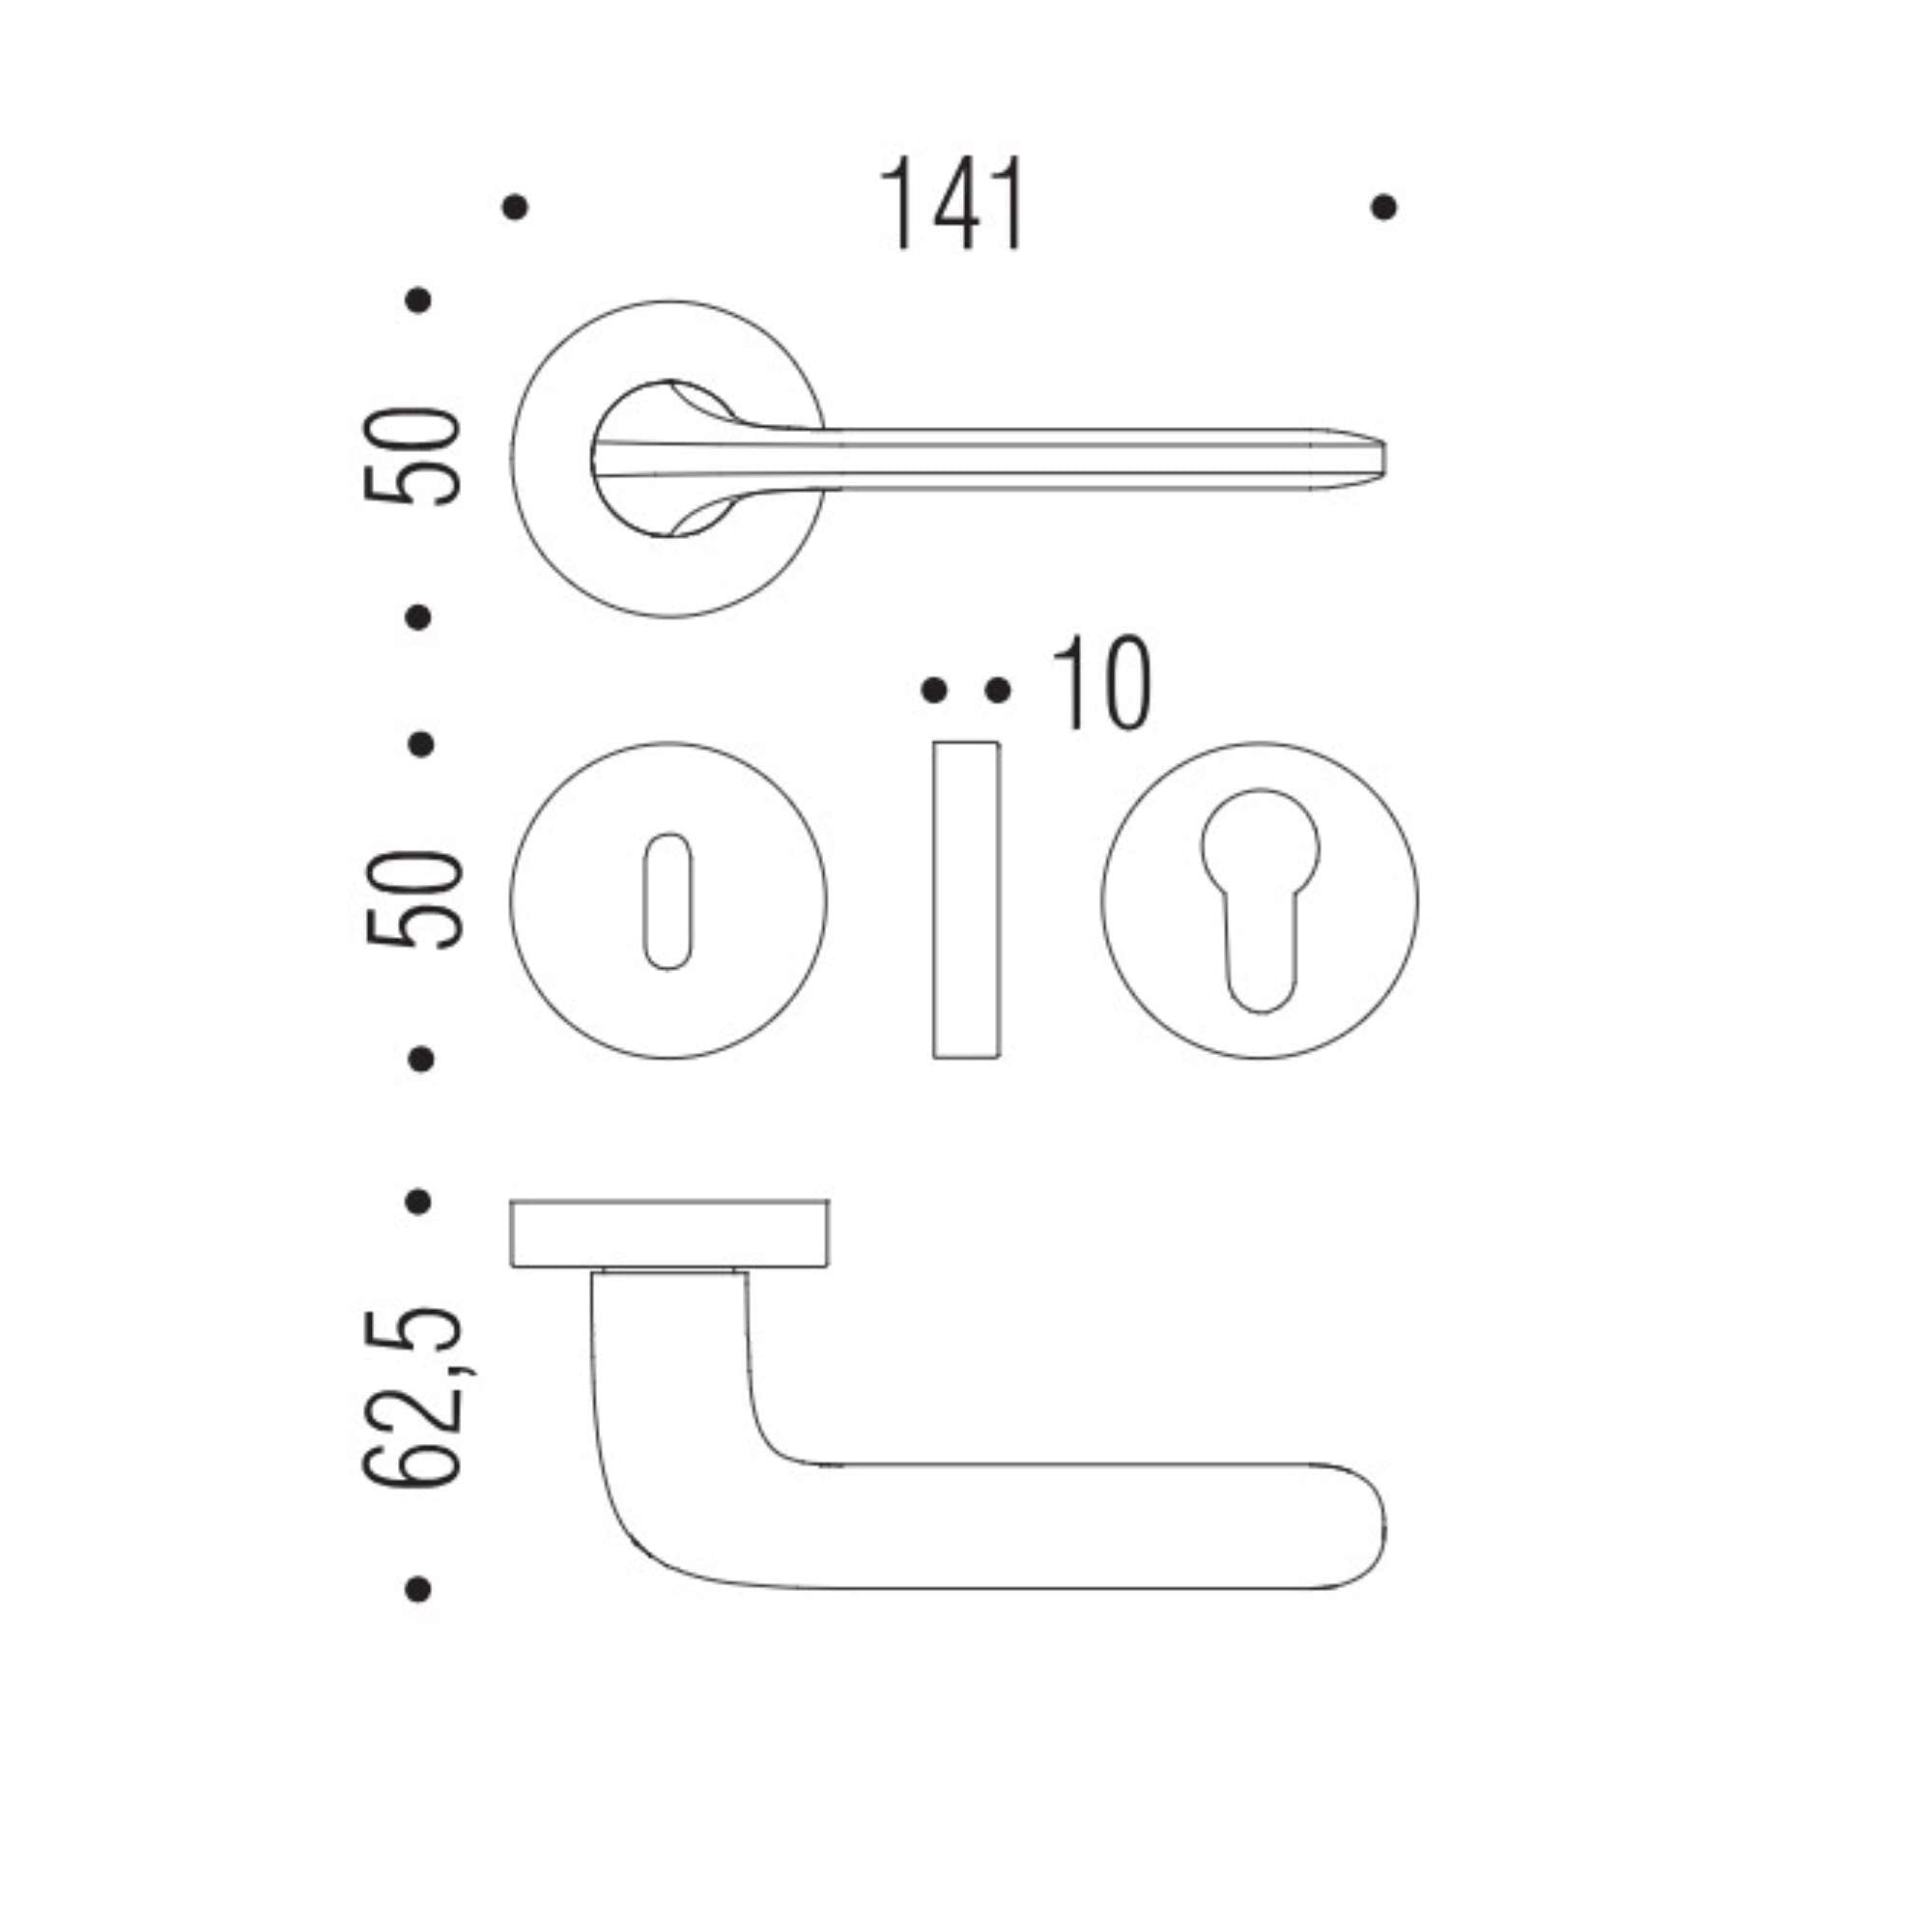 Handle roboquattro id41rcromat - Colombo design 0id41r-cm